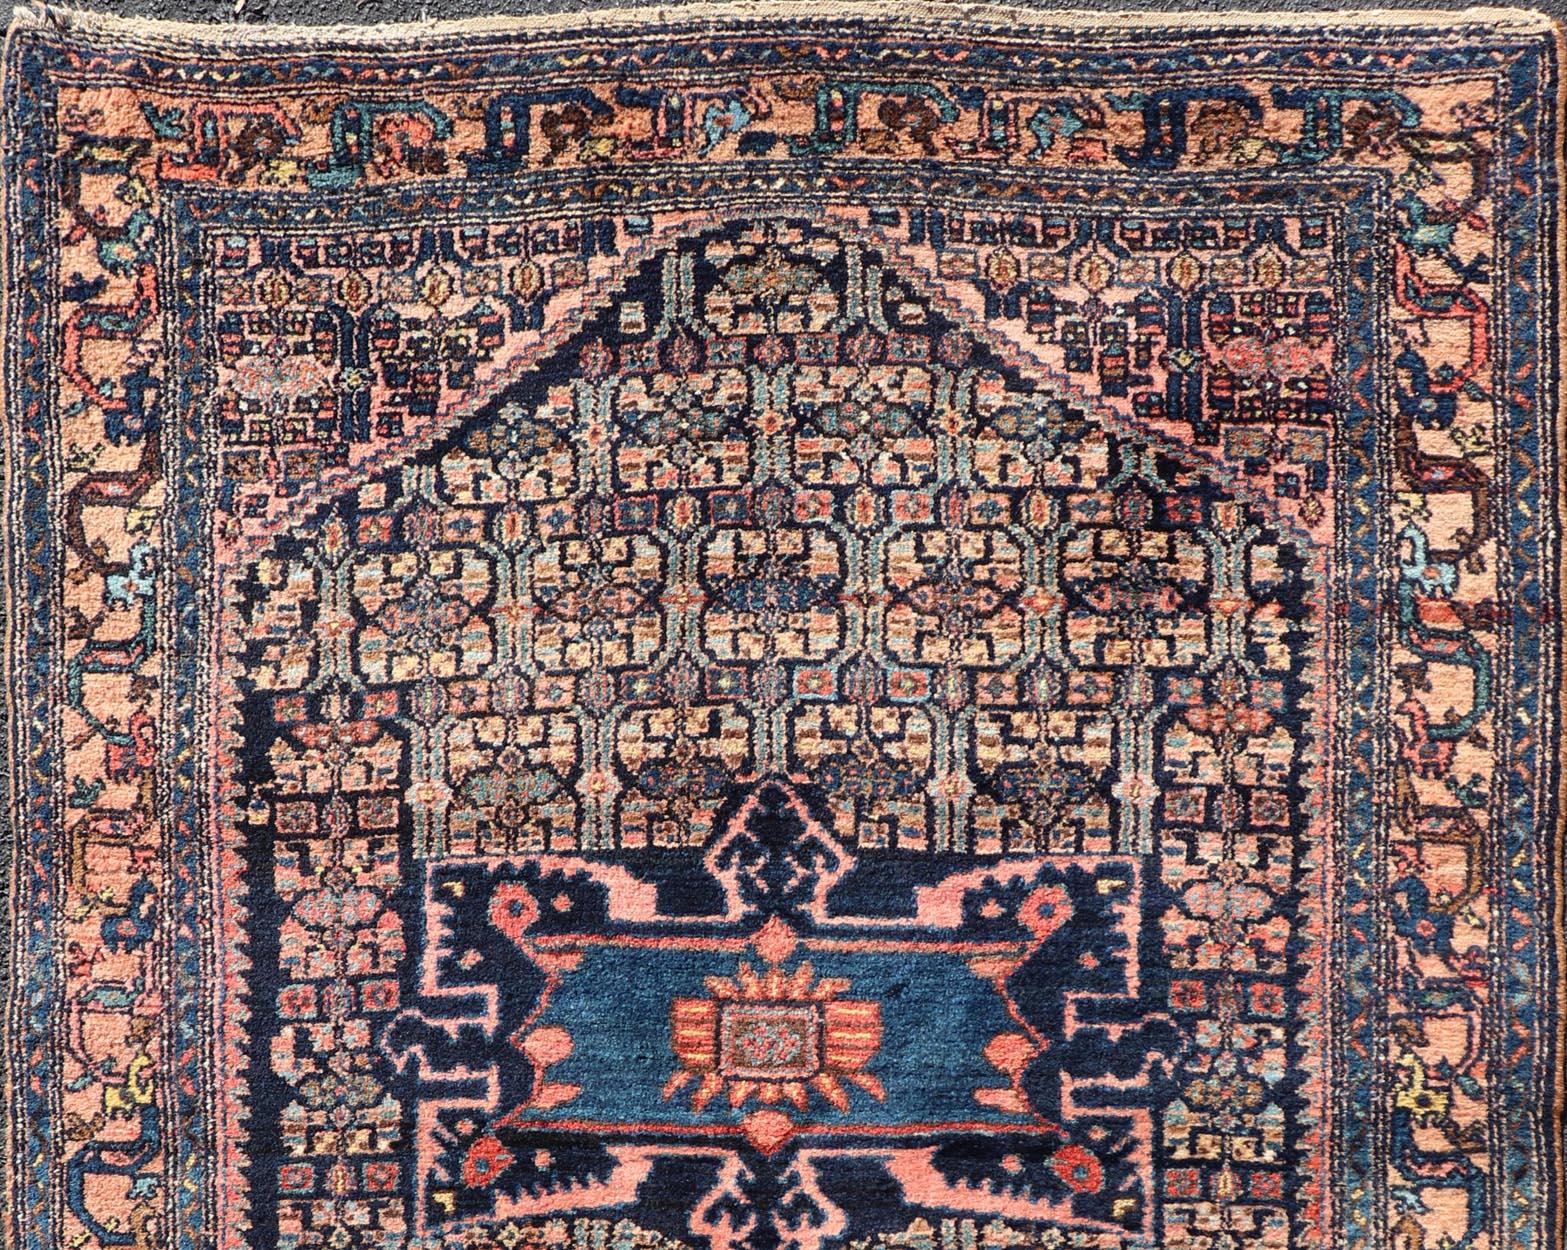 Blue, dark blue, pink, and tan Bibiakabad antique rug Persian, Keivan Woven Arts / rug W22-0103, country of origin / type: Iran / Bibiakabad , circa 1920.


Measures: 4'6 x 6'7.